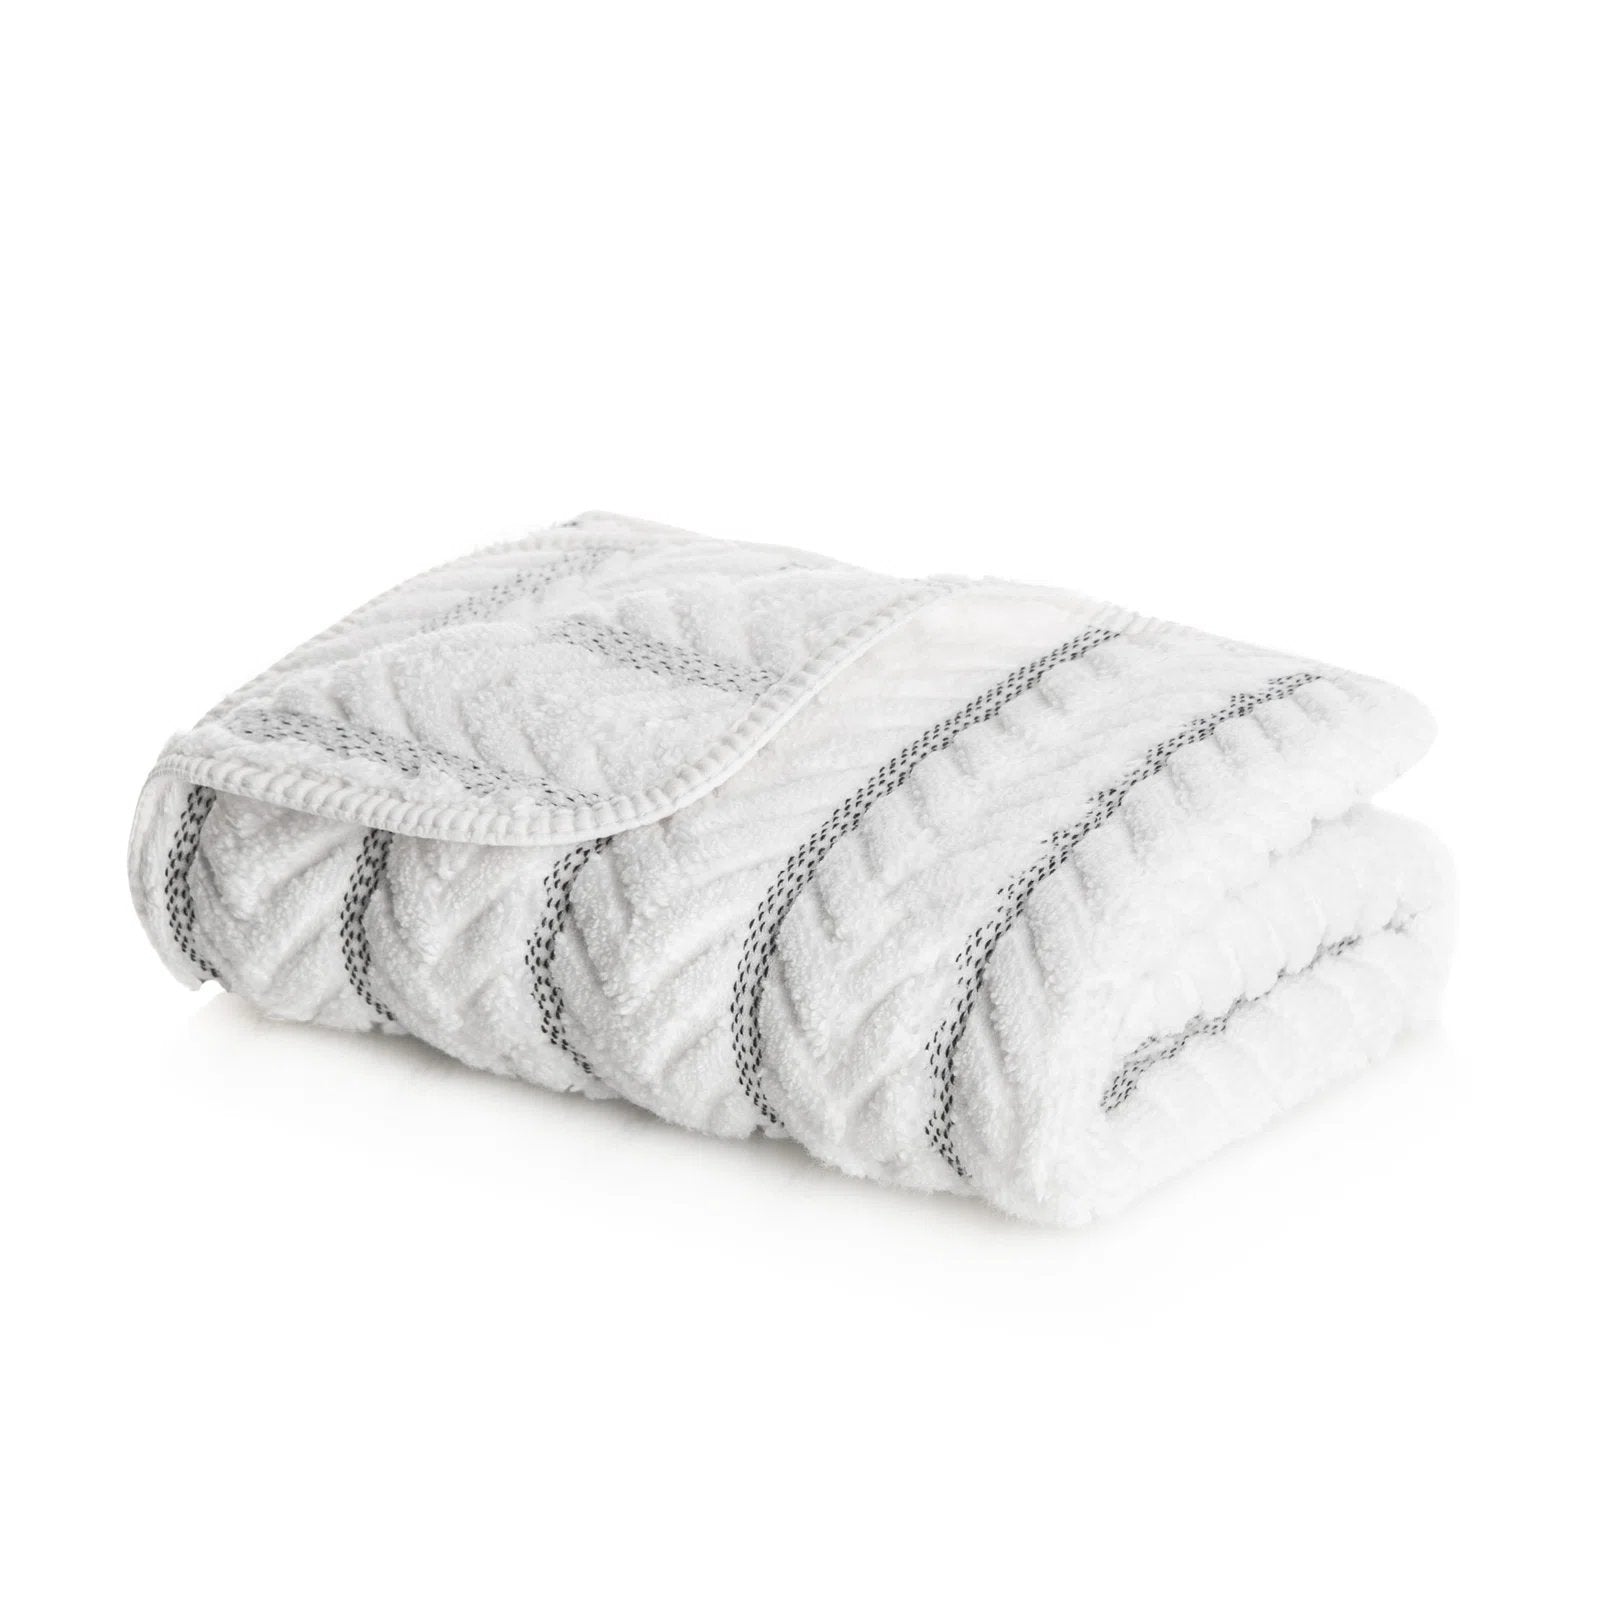 Graccioza Herron Bath Towel